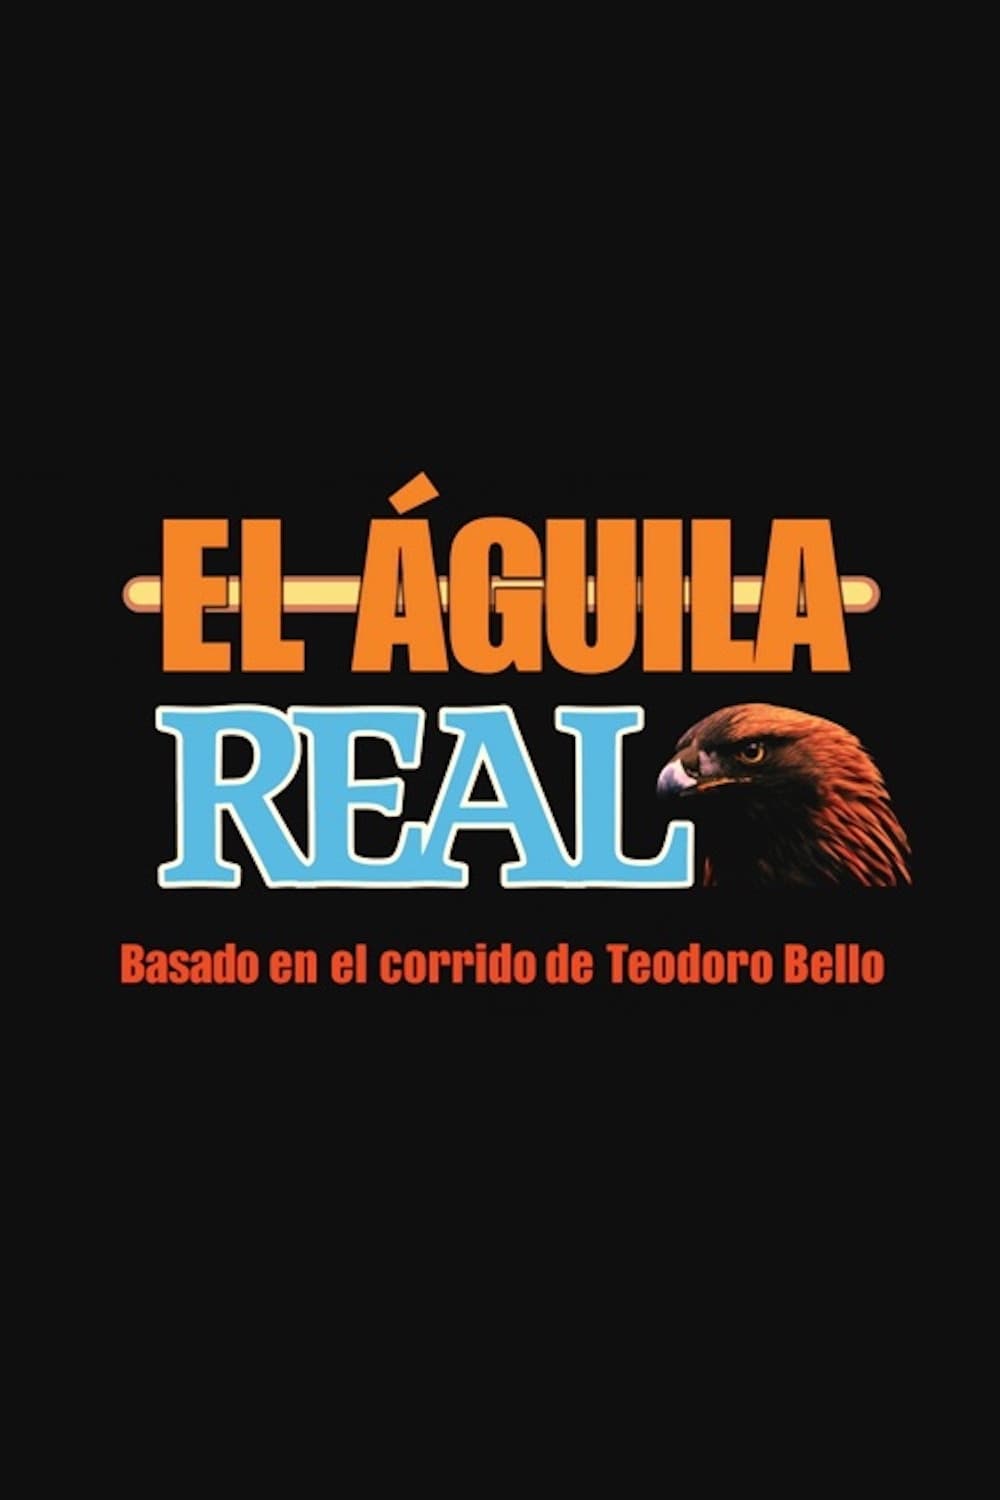 Watch El águila real (1994) Full Movie Free Online - Plex